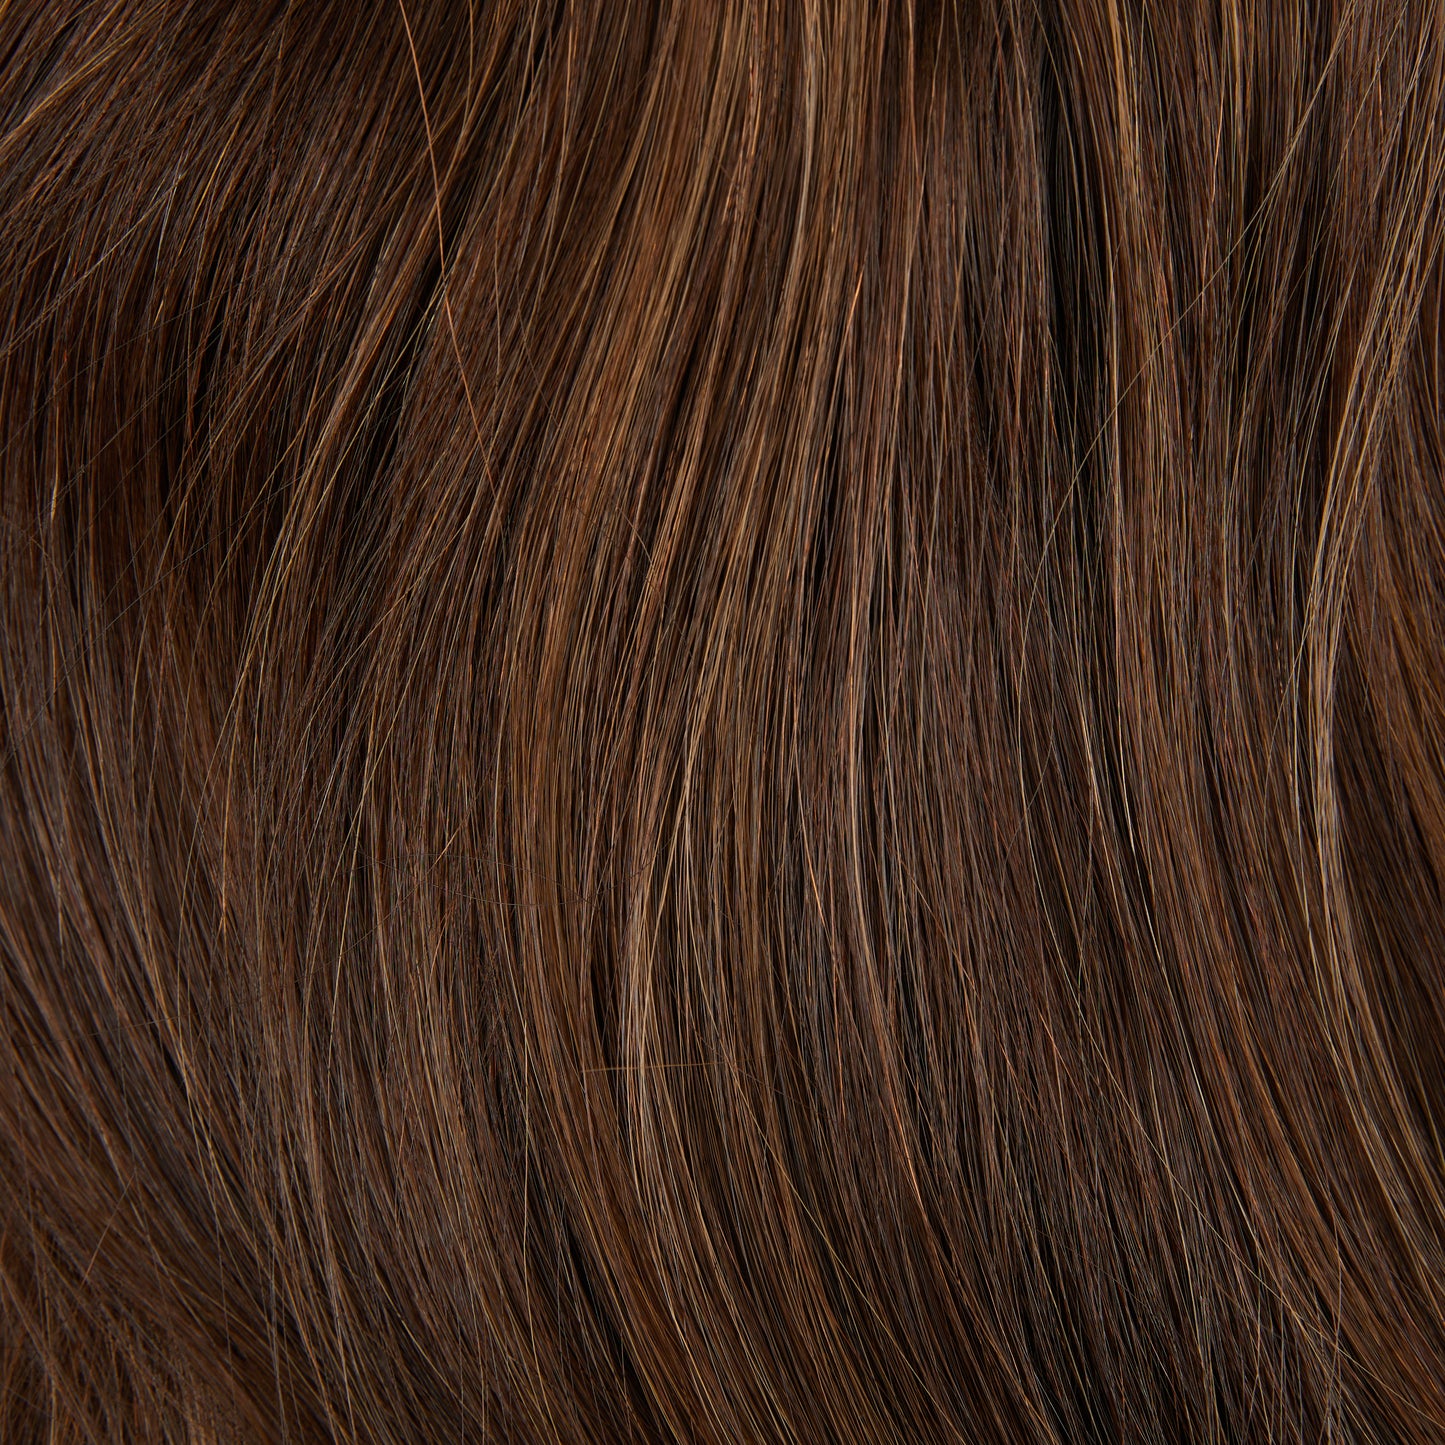 Medium Brown W/ Blond Highlights #12-4-6 Hair Extension